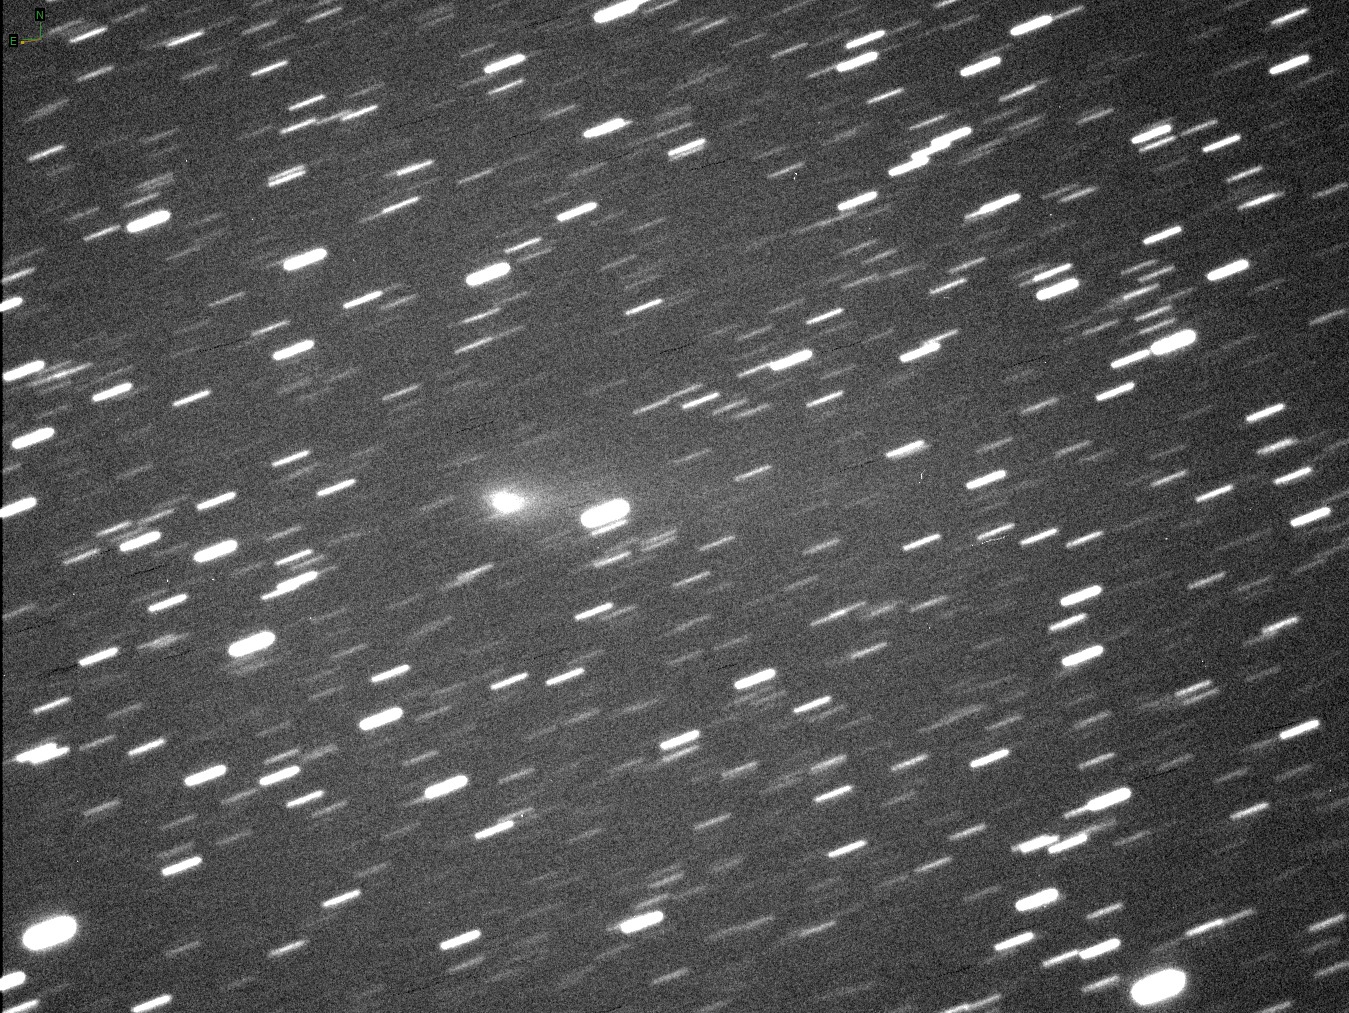 luciano_tinelli-4pfaye_comet-20211015